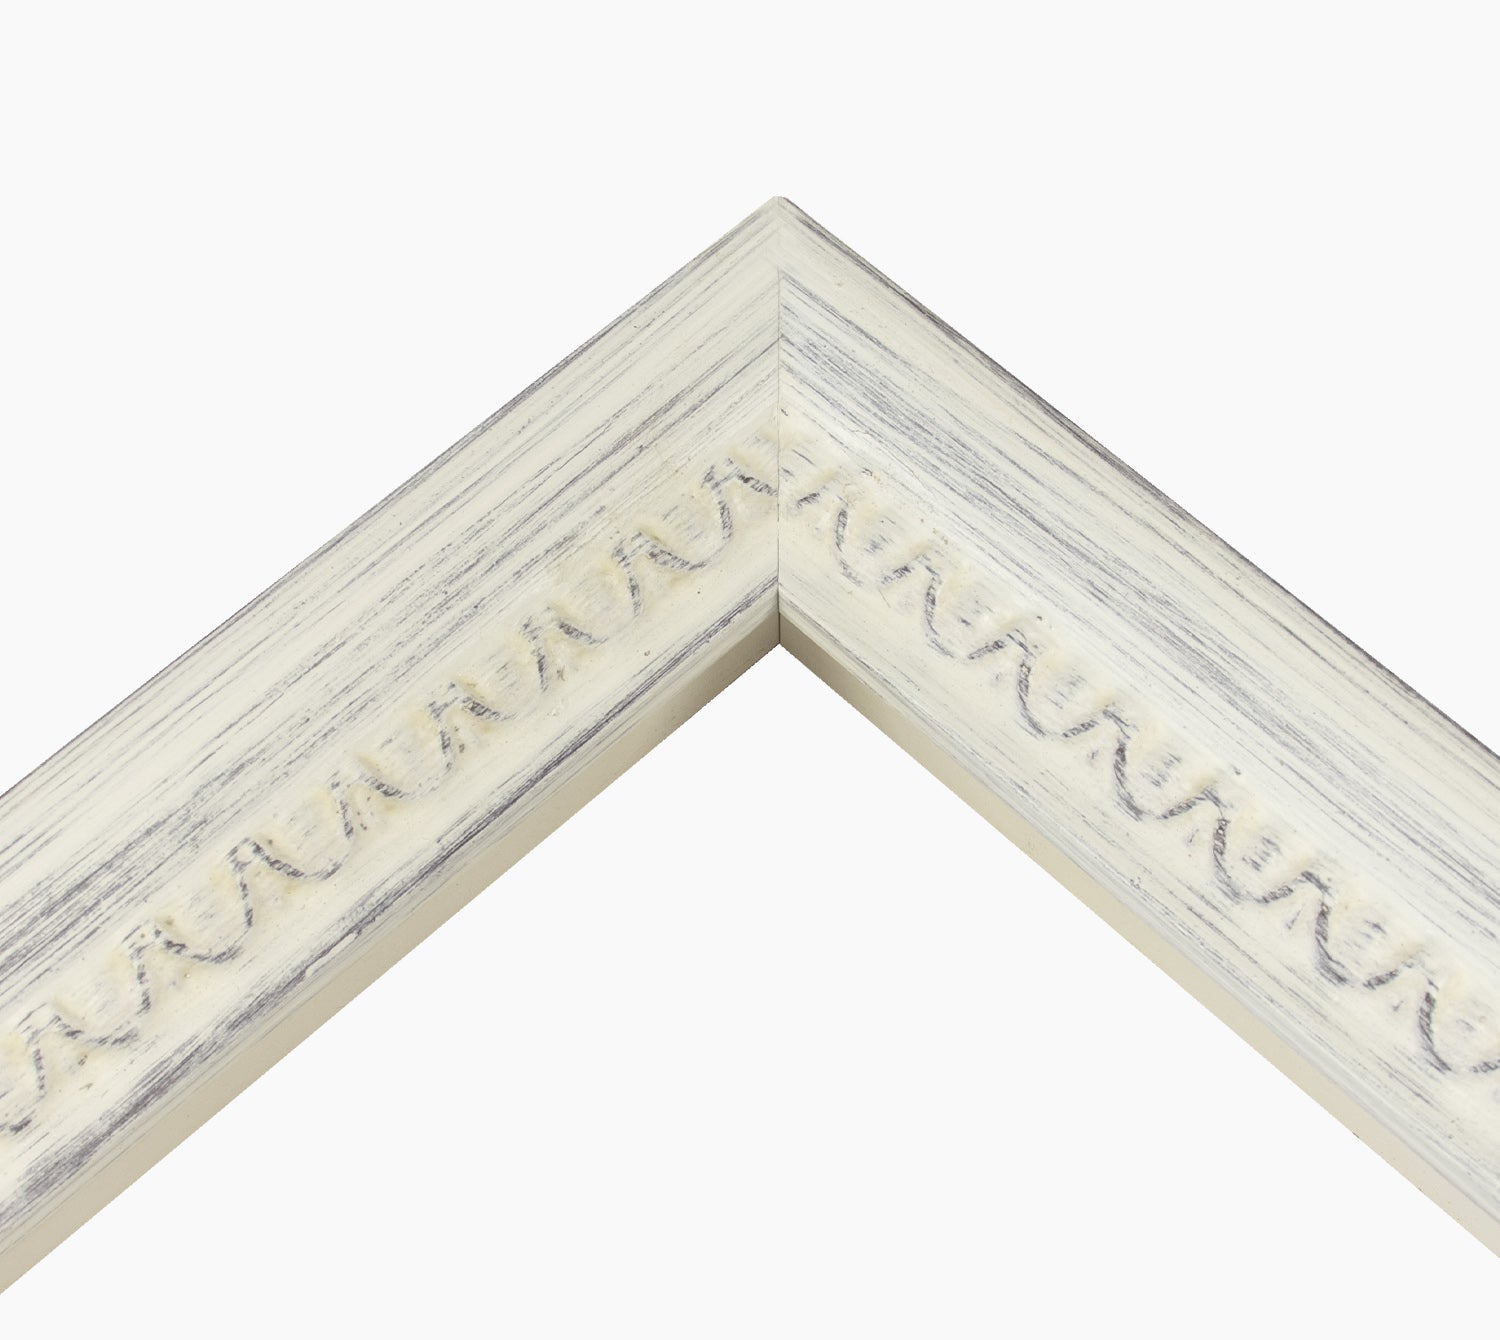 228.920 cadre en bois à fond sombre blanc mesure de profil 45x45 mm Lombarda cornici S.n.c.